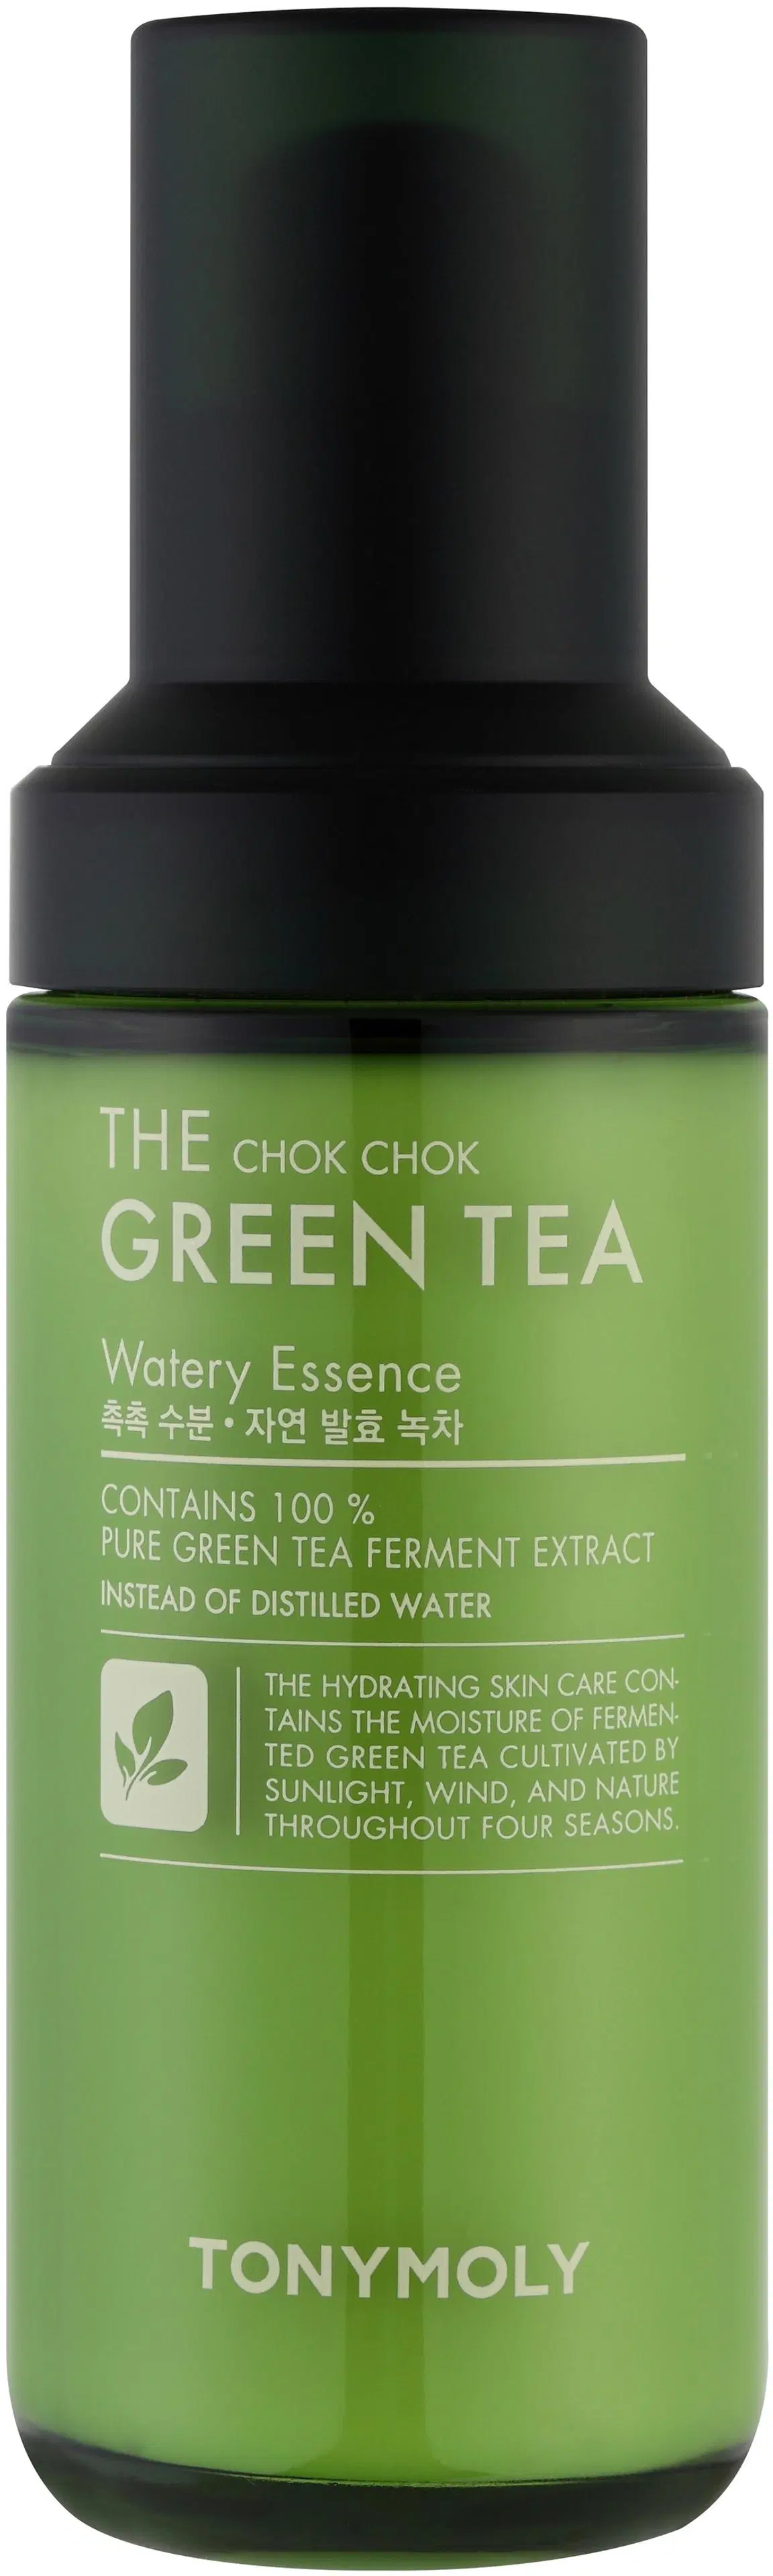 Tonymoly The Chok Chok Green Tea Watery Essence 55ml